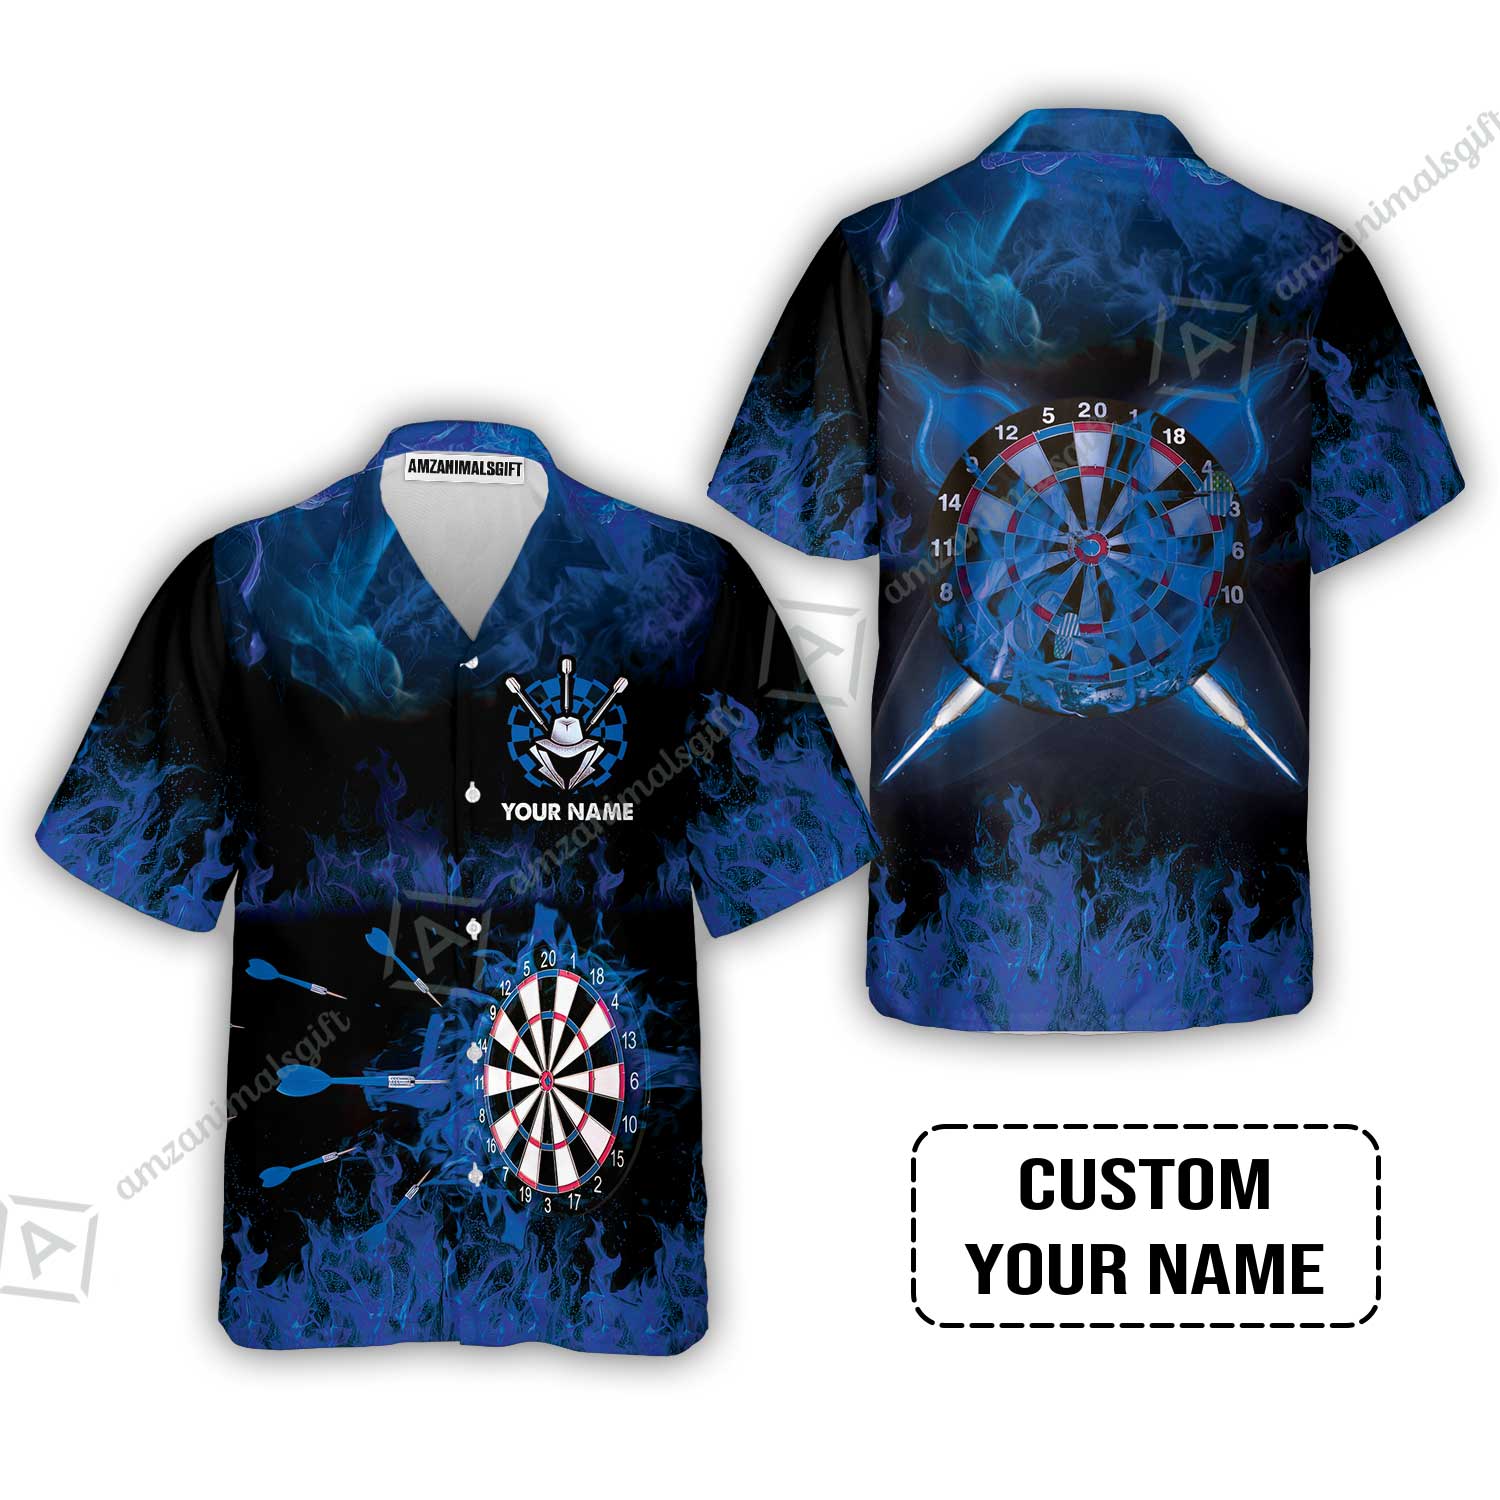 Customized Darts Hawaiian Shirt, Darts Blue Polo Shirt, Personalized Name Hawaiian Shirt - Perfect Gift For Darts Lovers, Darts Players